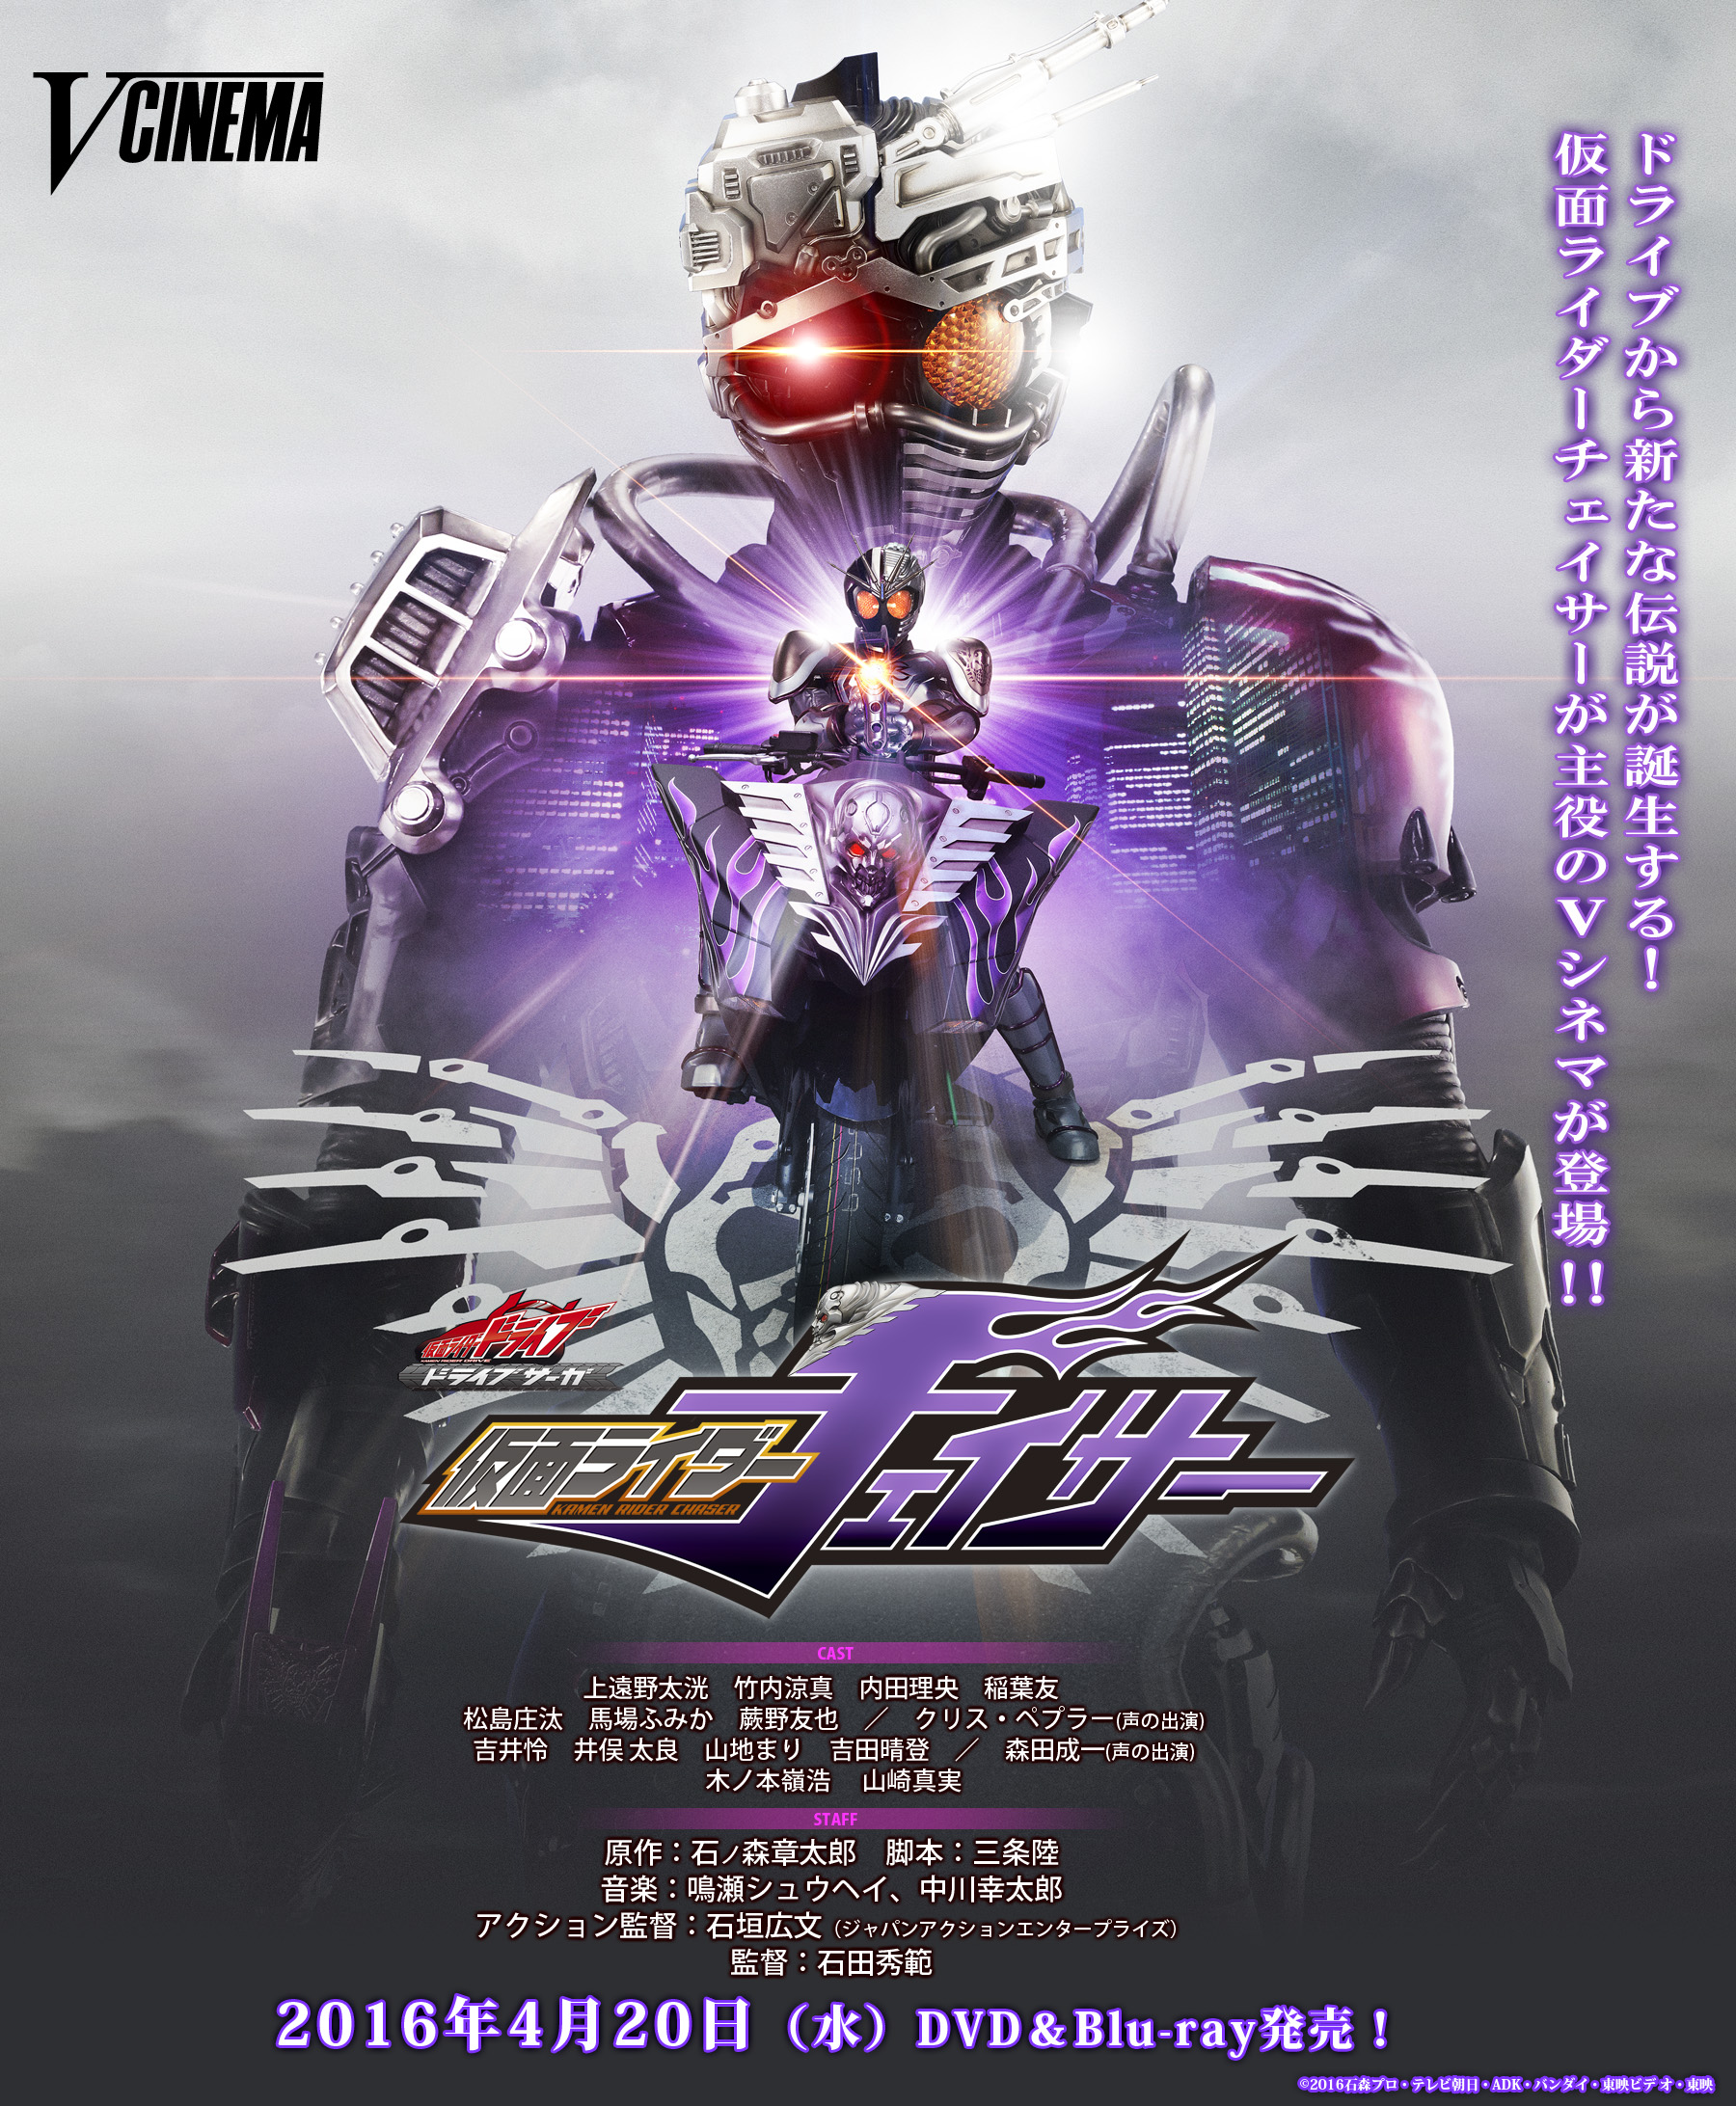 Kamen Rider Drive Saga: Kamen Rider Chaser - A movie for Kamen Rider Drive